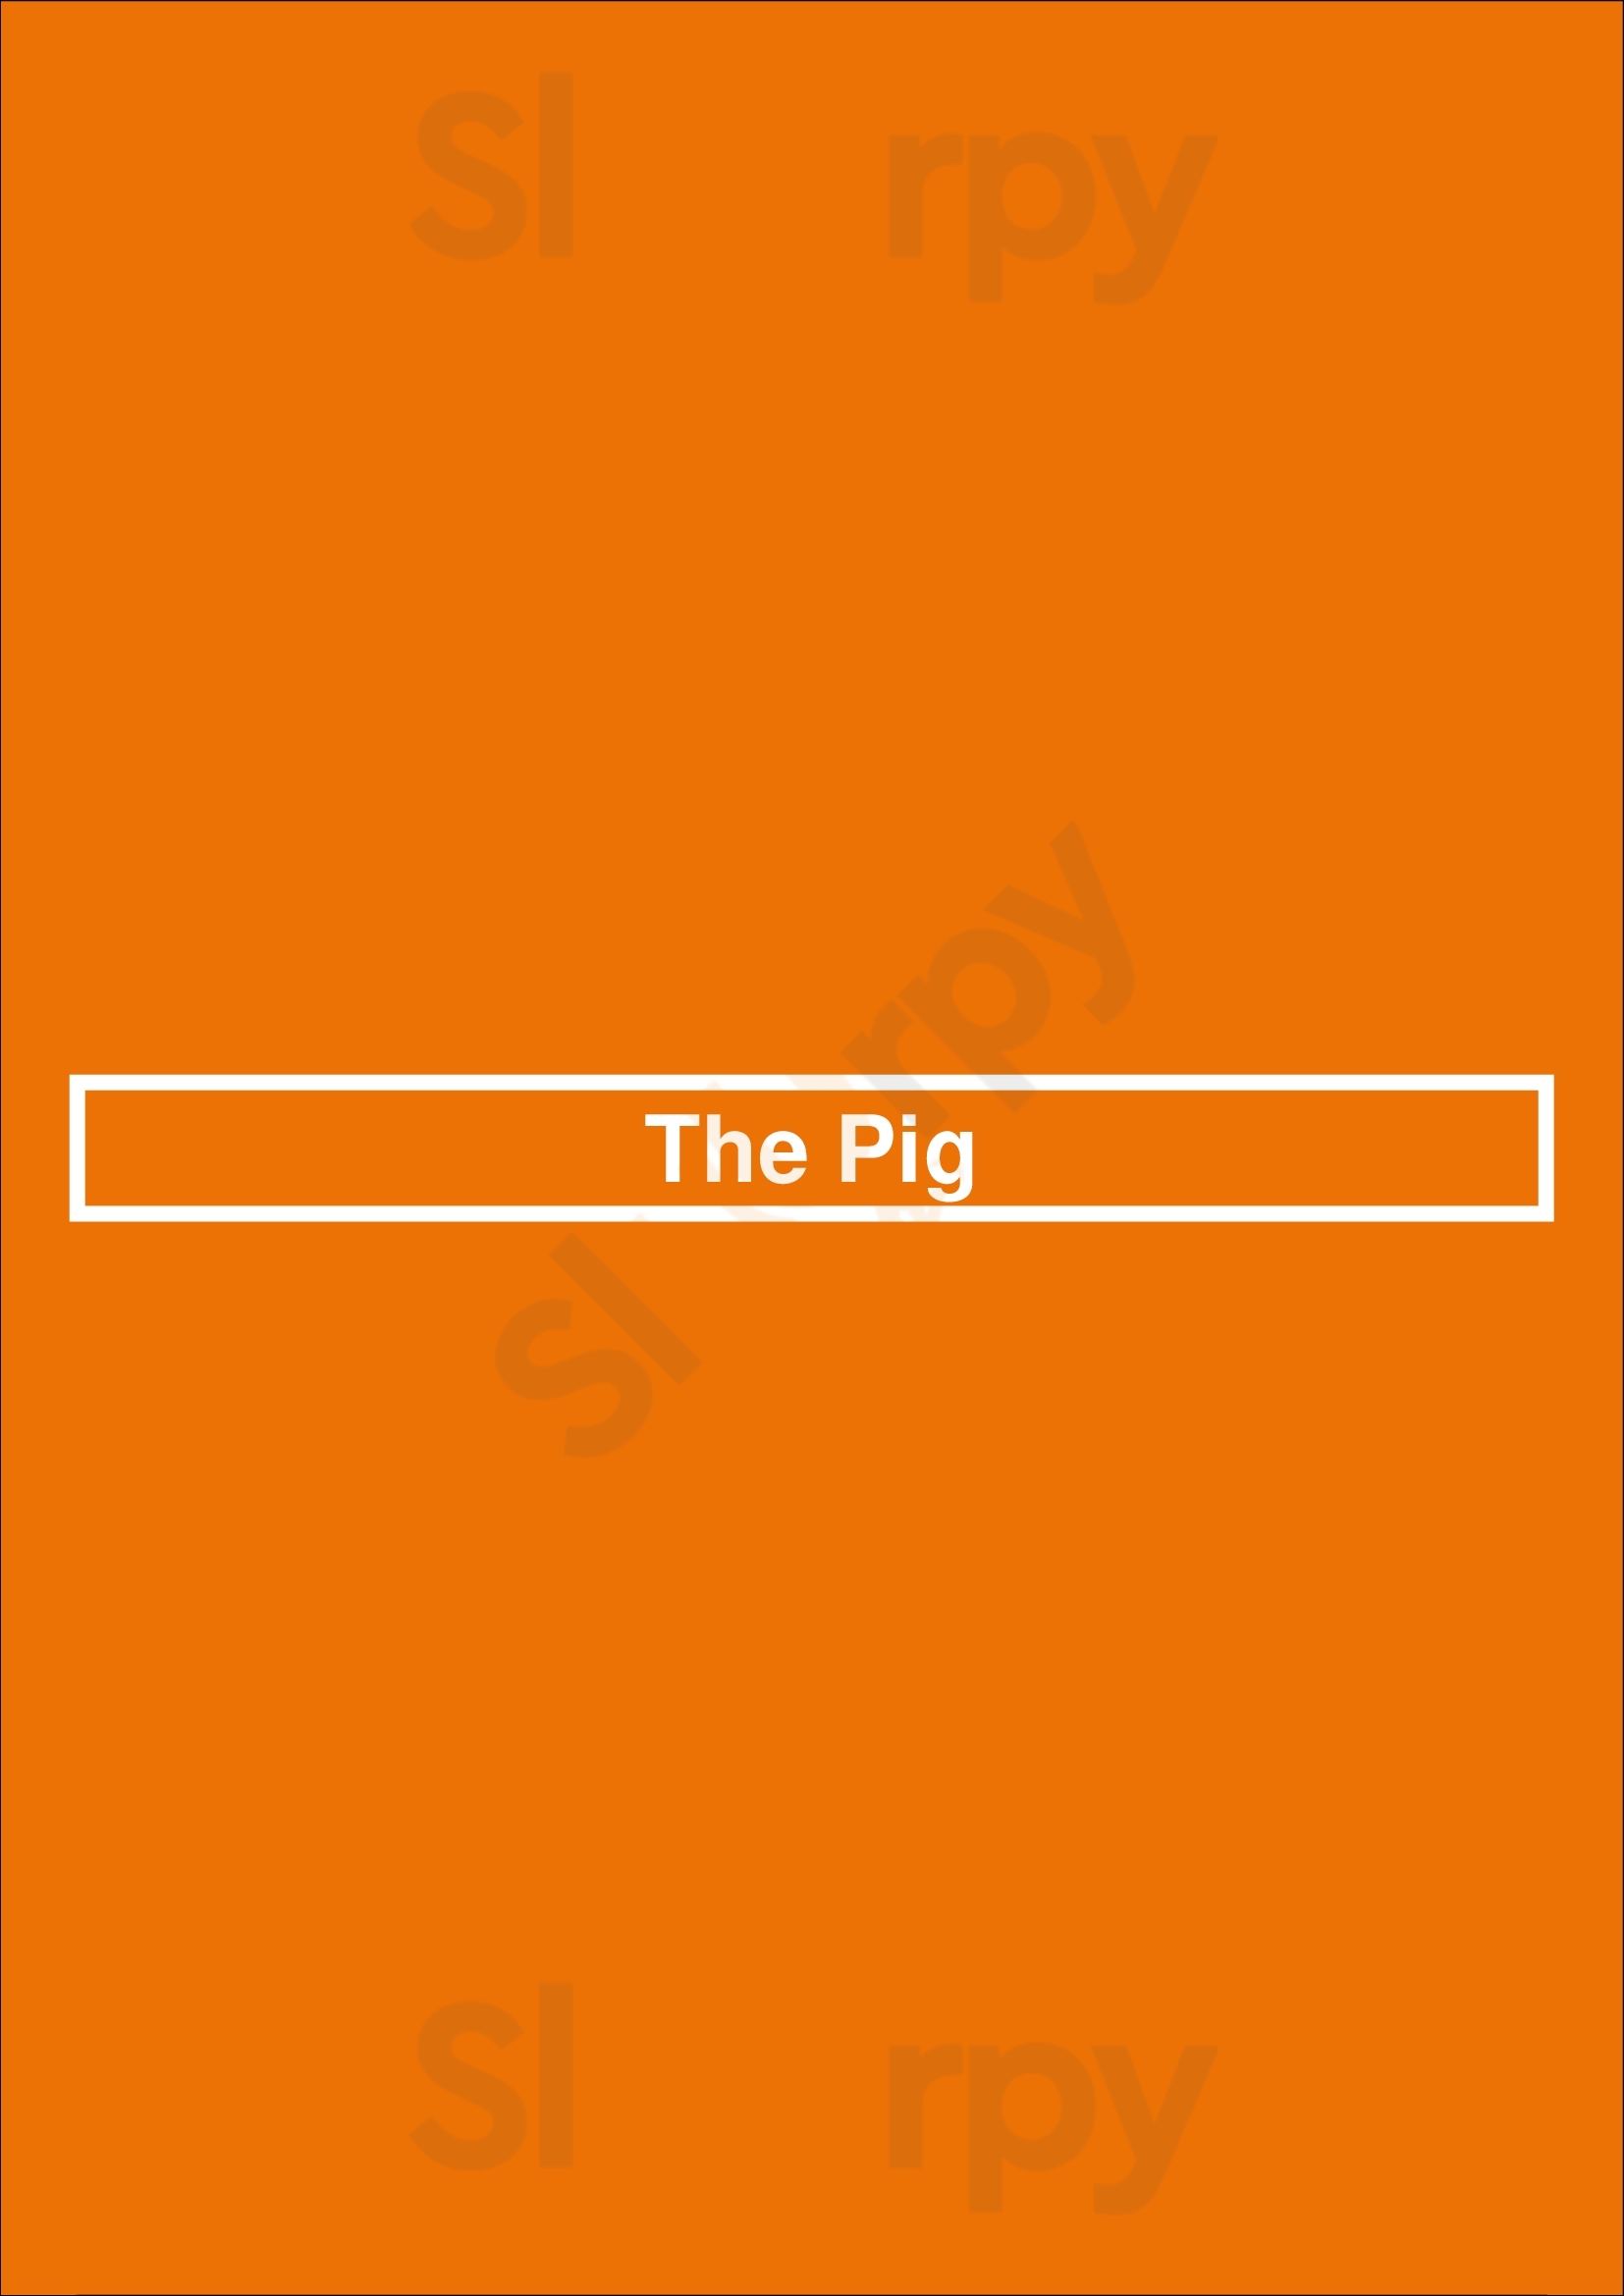 The Pig Washington DC Menu - 1